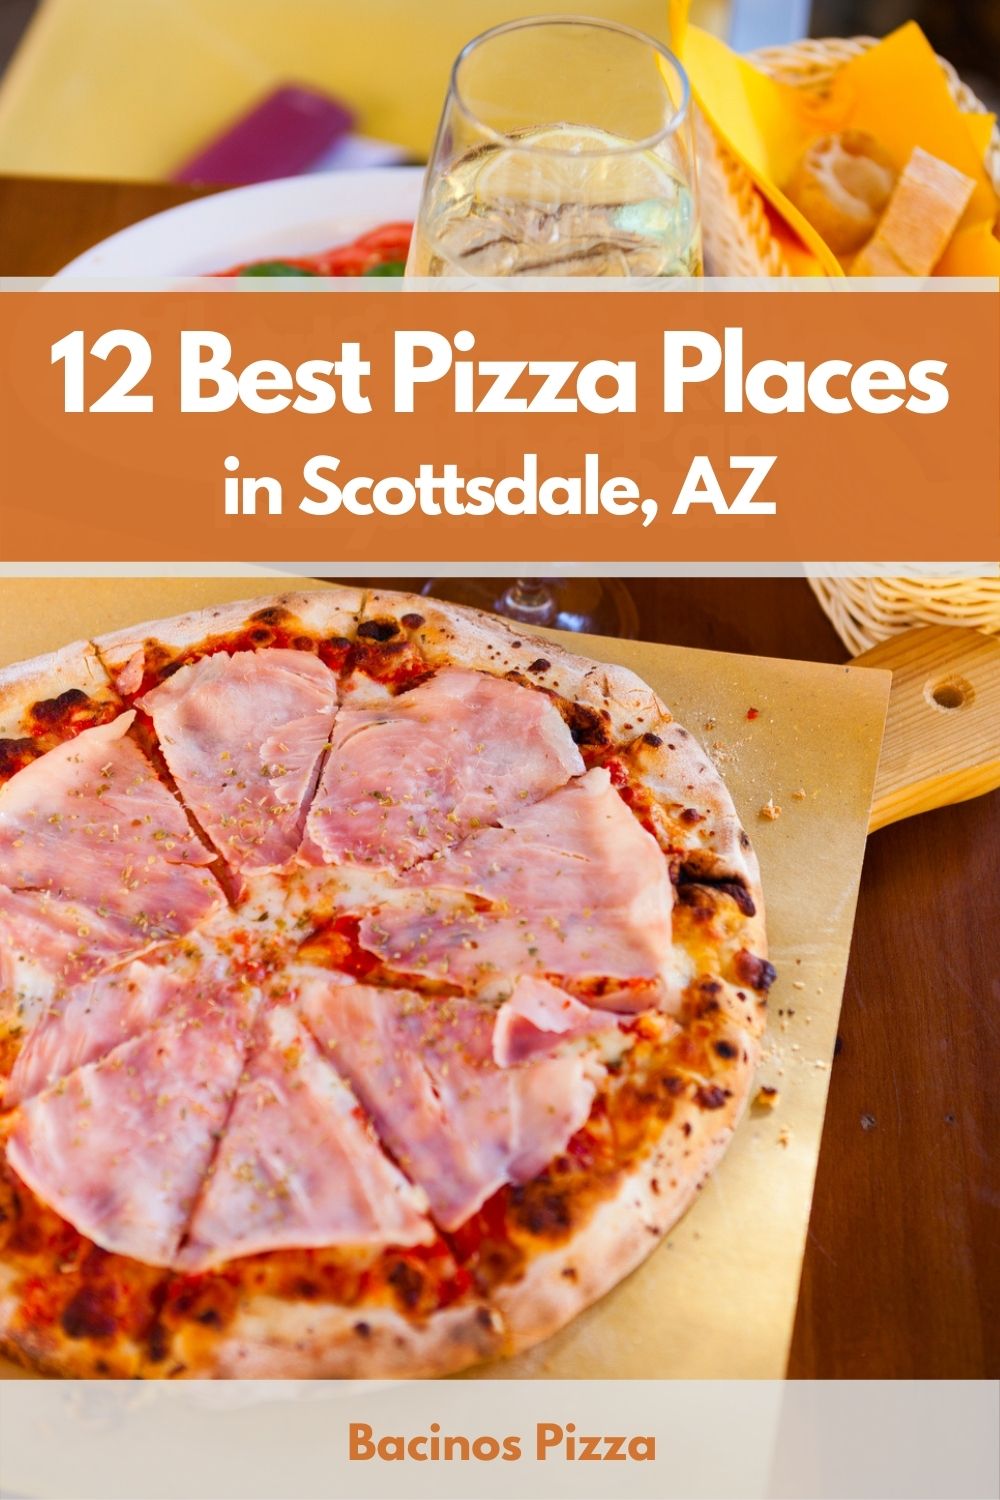 12 Best Pizza Places in Scottsdale, AZ pin 2